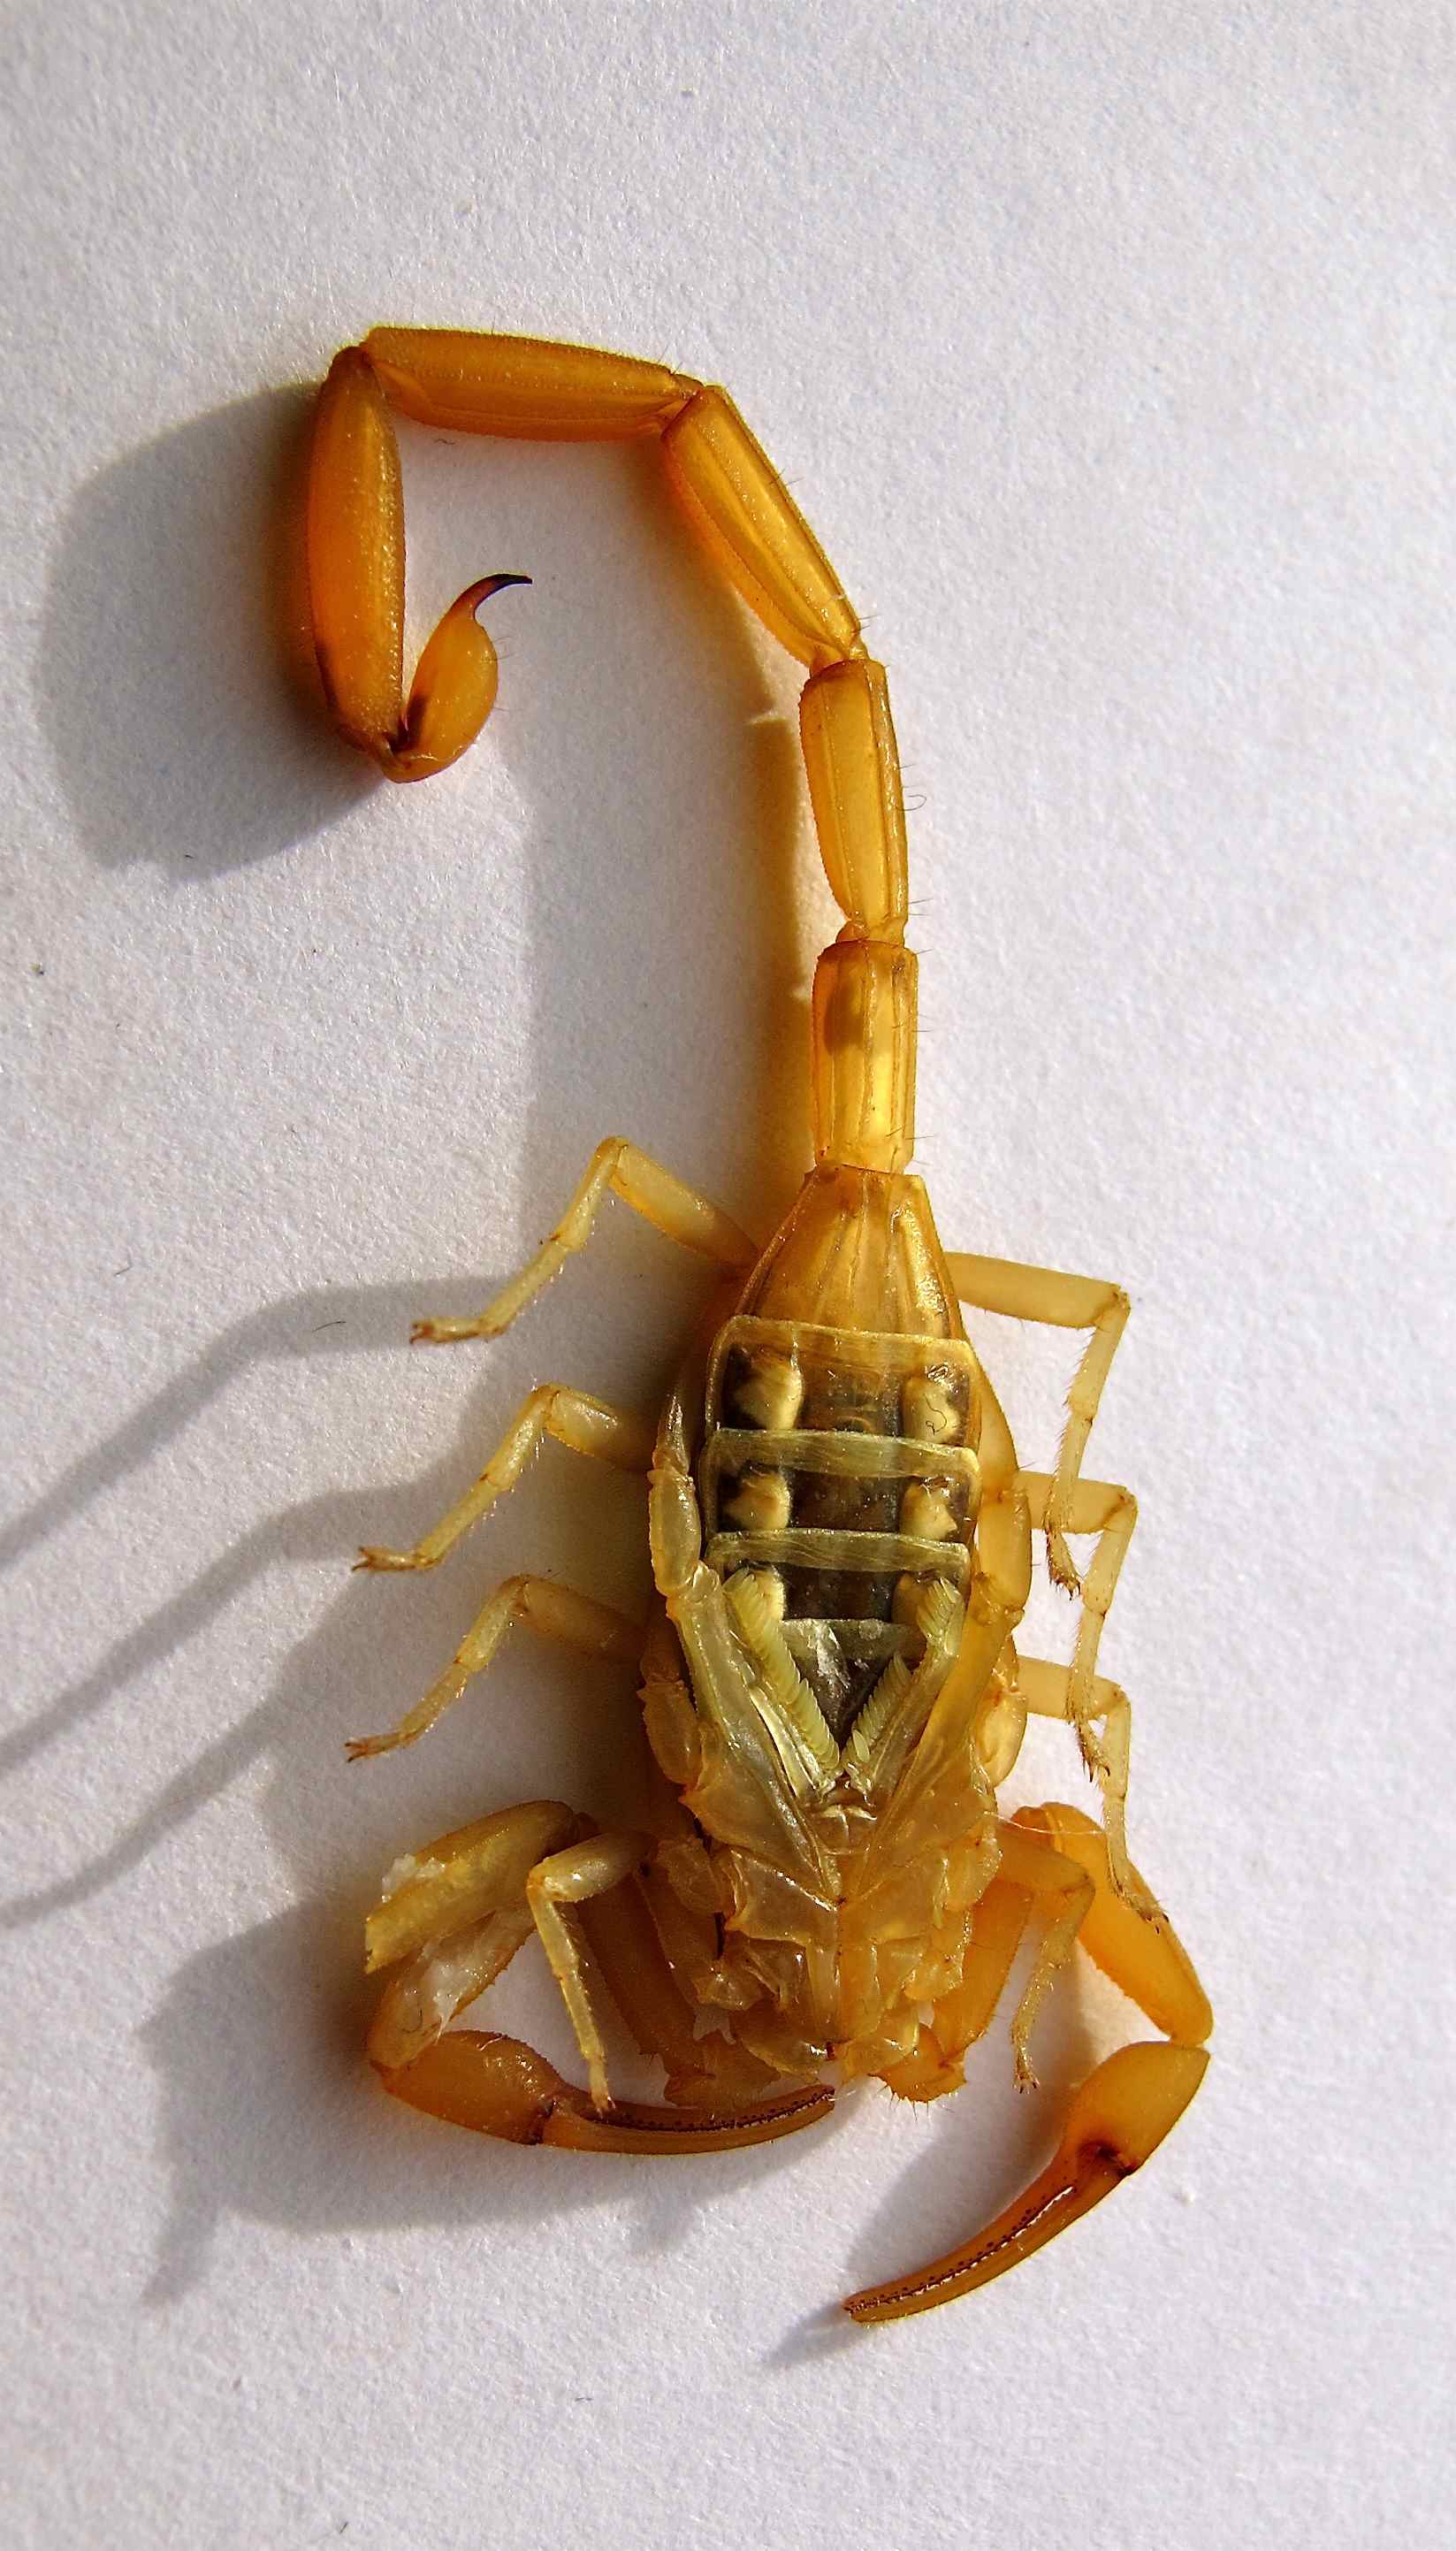 Arizona Bark Scorpion - Centruroides sculpturatus - ventral view